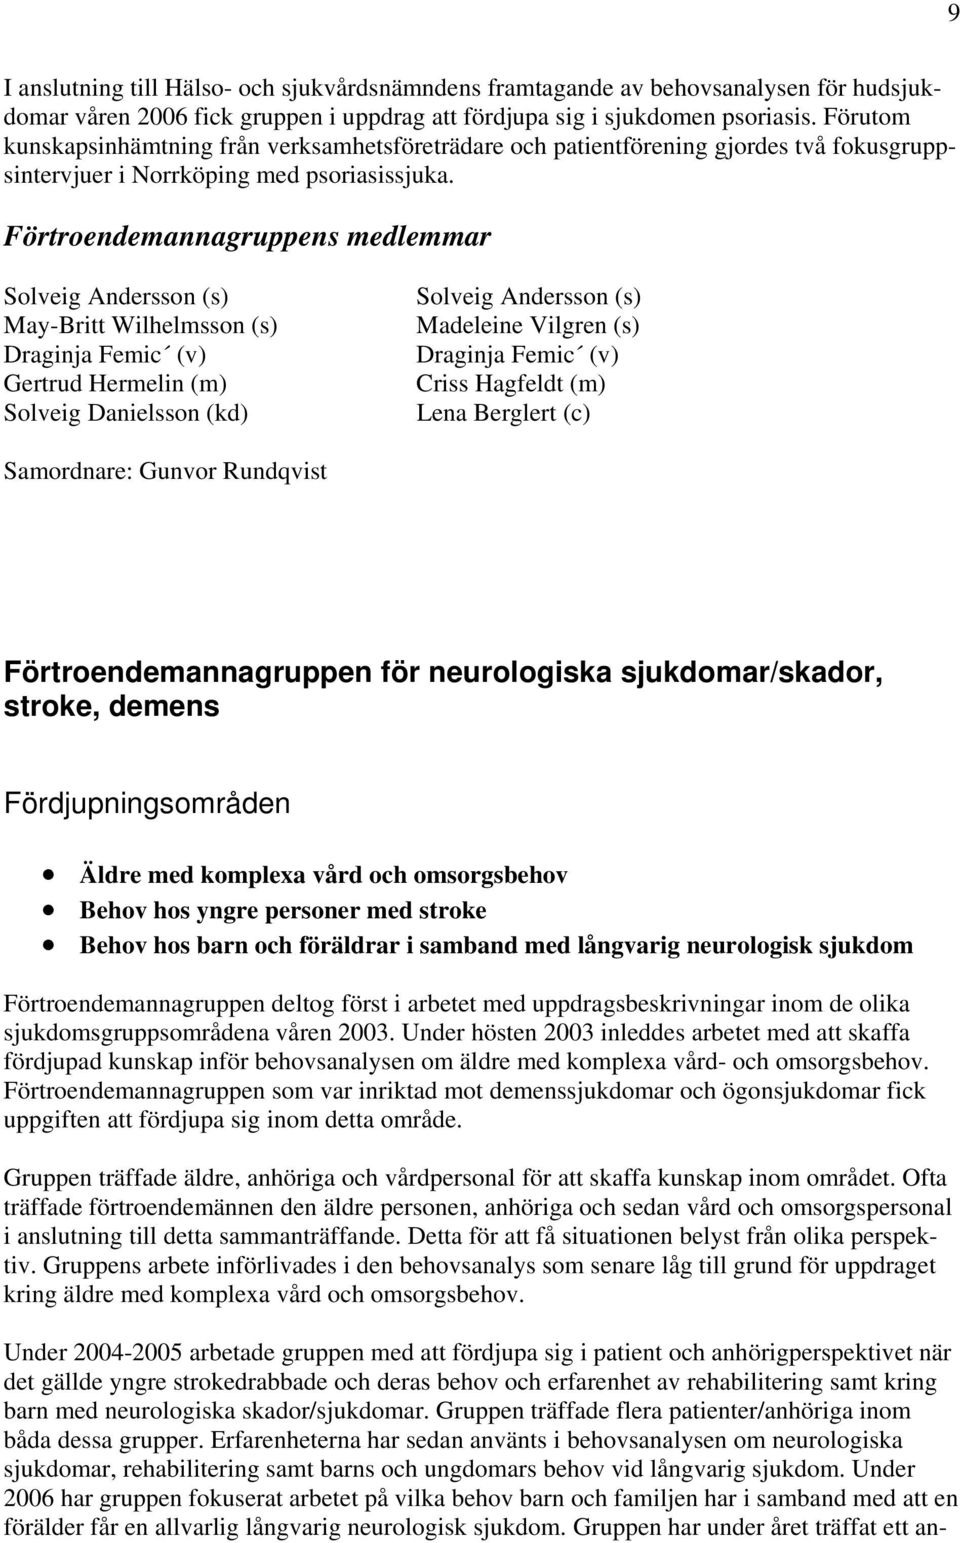 Förtroendemannagruppens medlemmar Solveig Andersson (s) May-Britt Wilhelmsson (s) Draginja Femic (v) Gertrud Hermelin (m) Solveig Danielsson (kd) Solveig Andersson (s) Madeleine Vilgren (s) Draginja